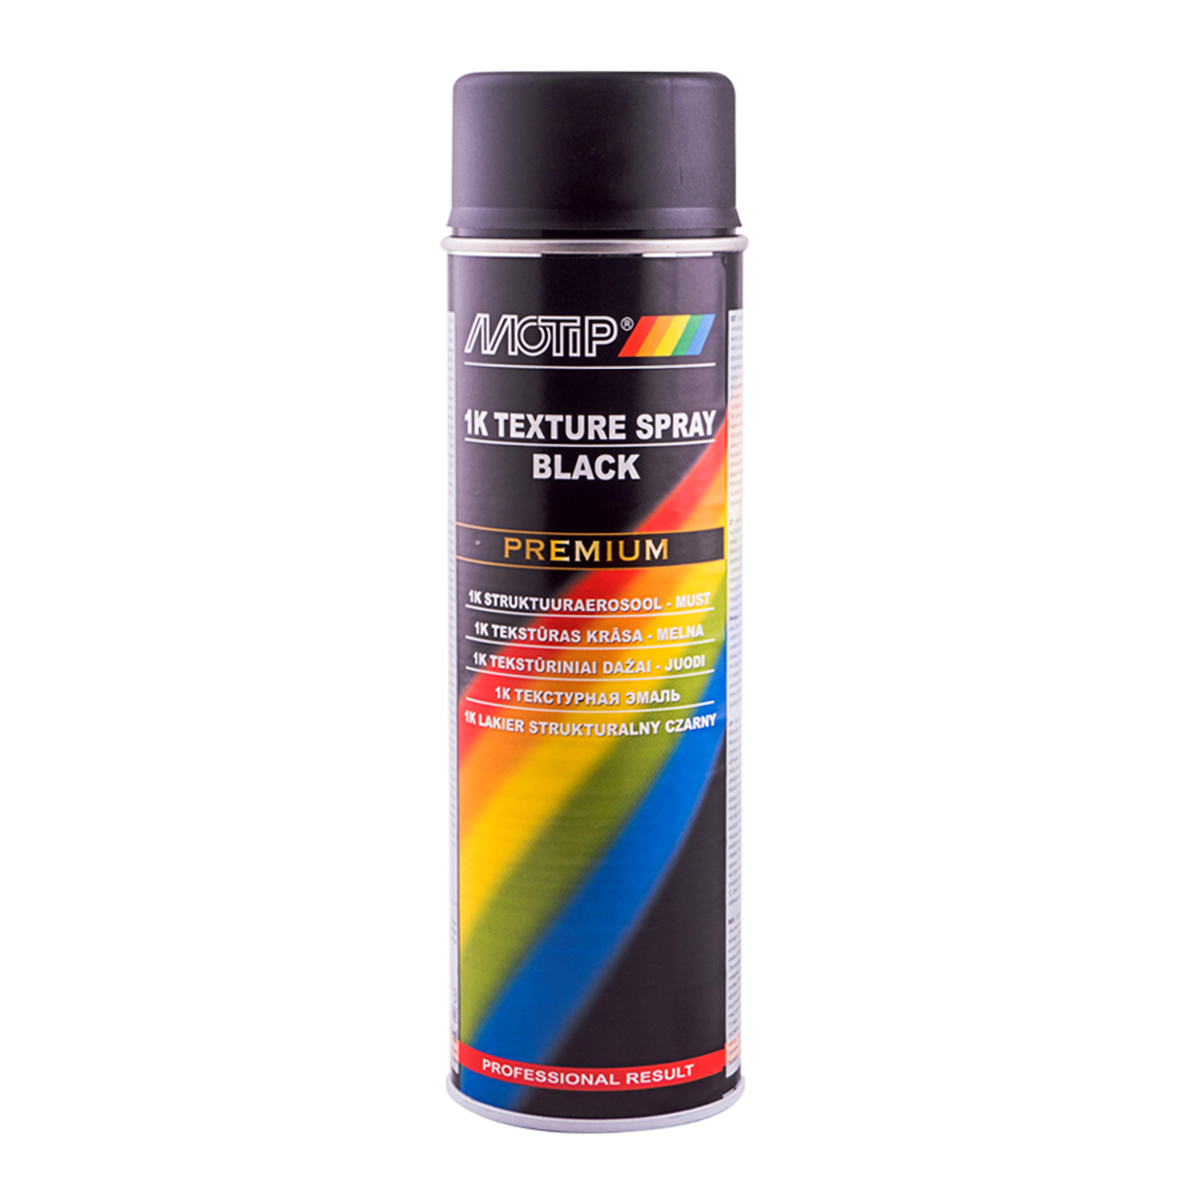 1K Texture Spray Black (текстурная краска) Motip 500ml 04123